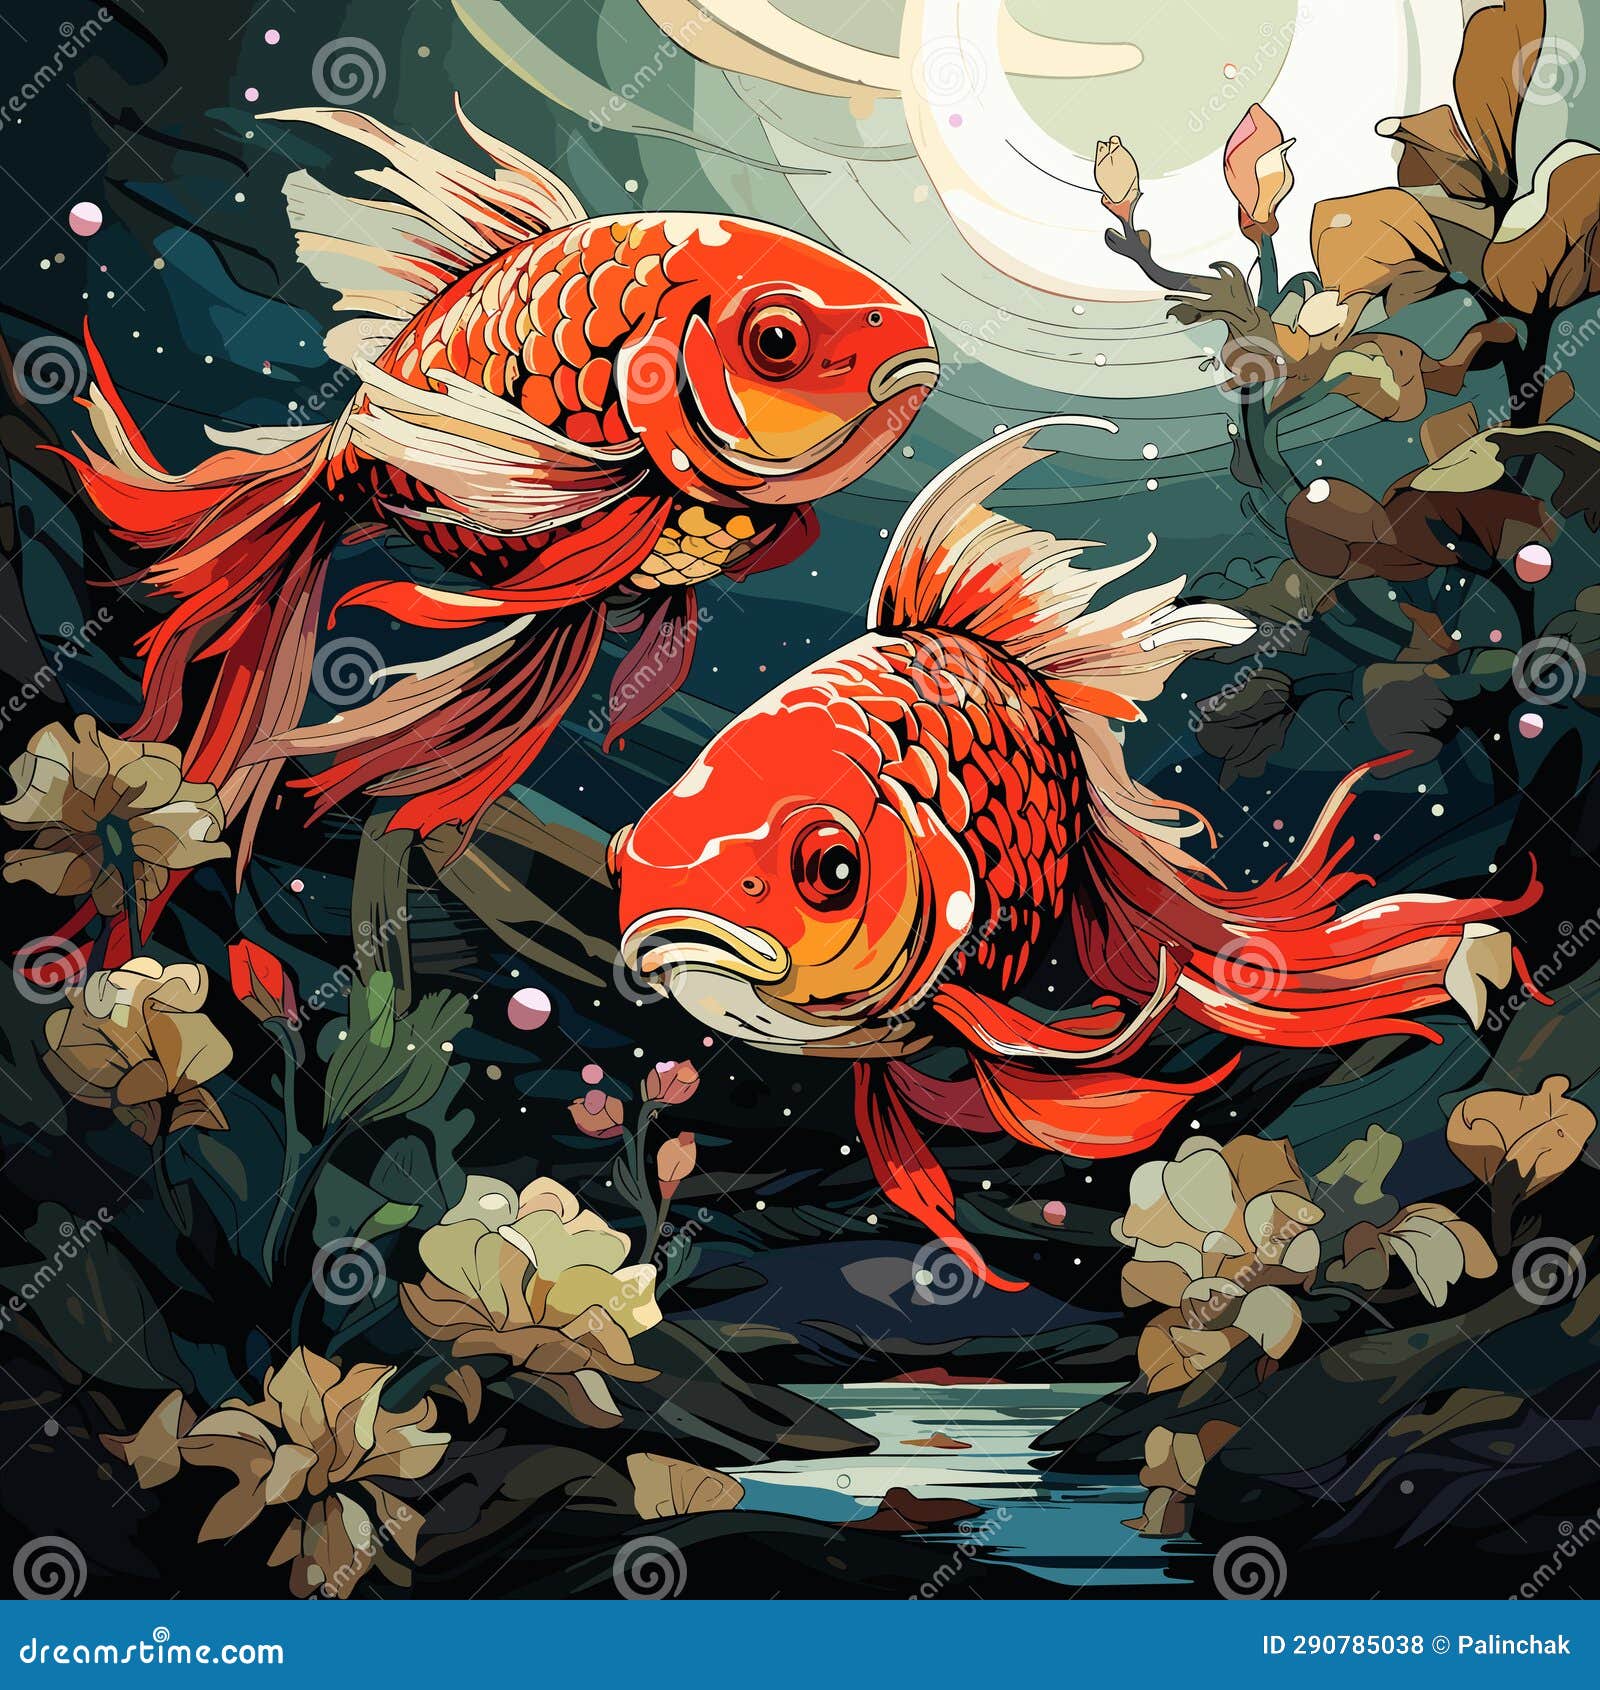 368 Koi Fish Vector Art Stock Photos - Free & Royalty-Free Stock